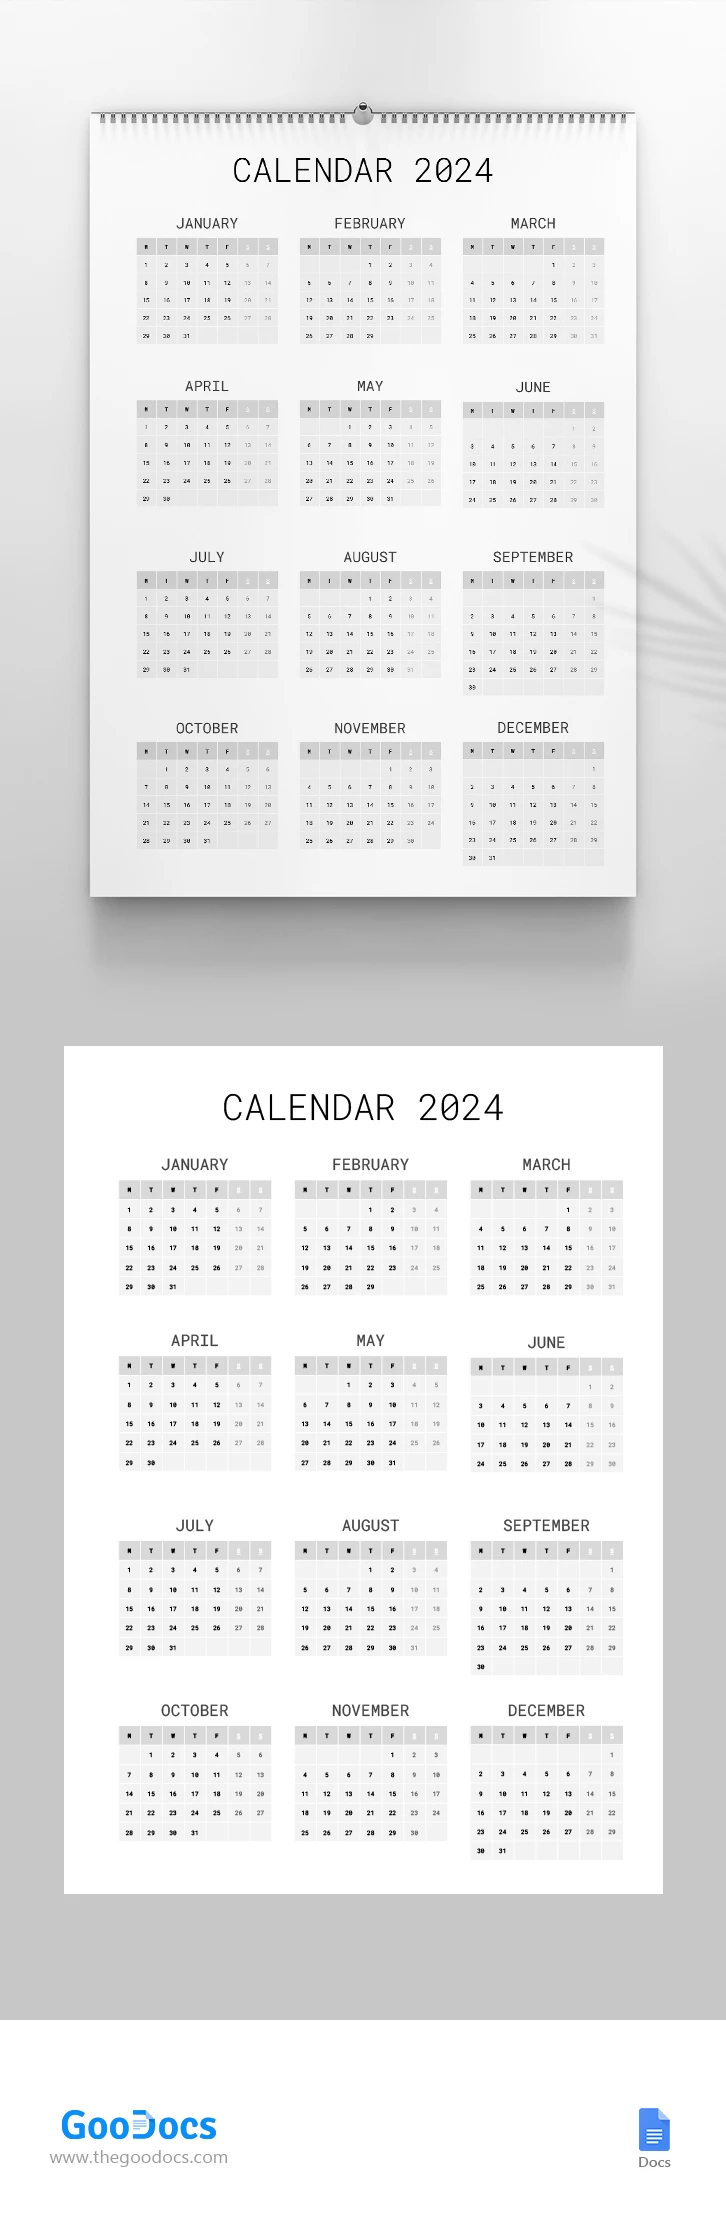 Jahreskalender 2024 - free Google Docs Template - 10068199